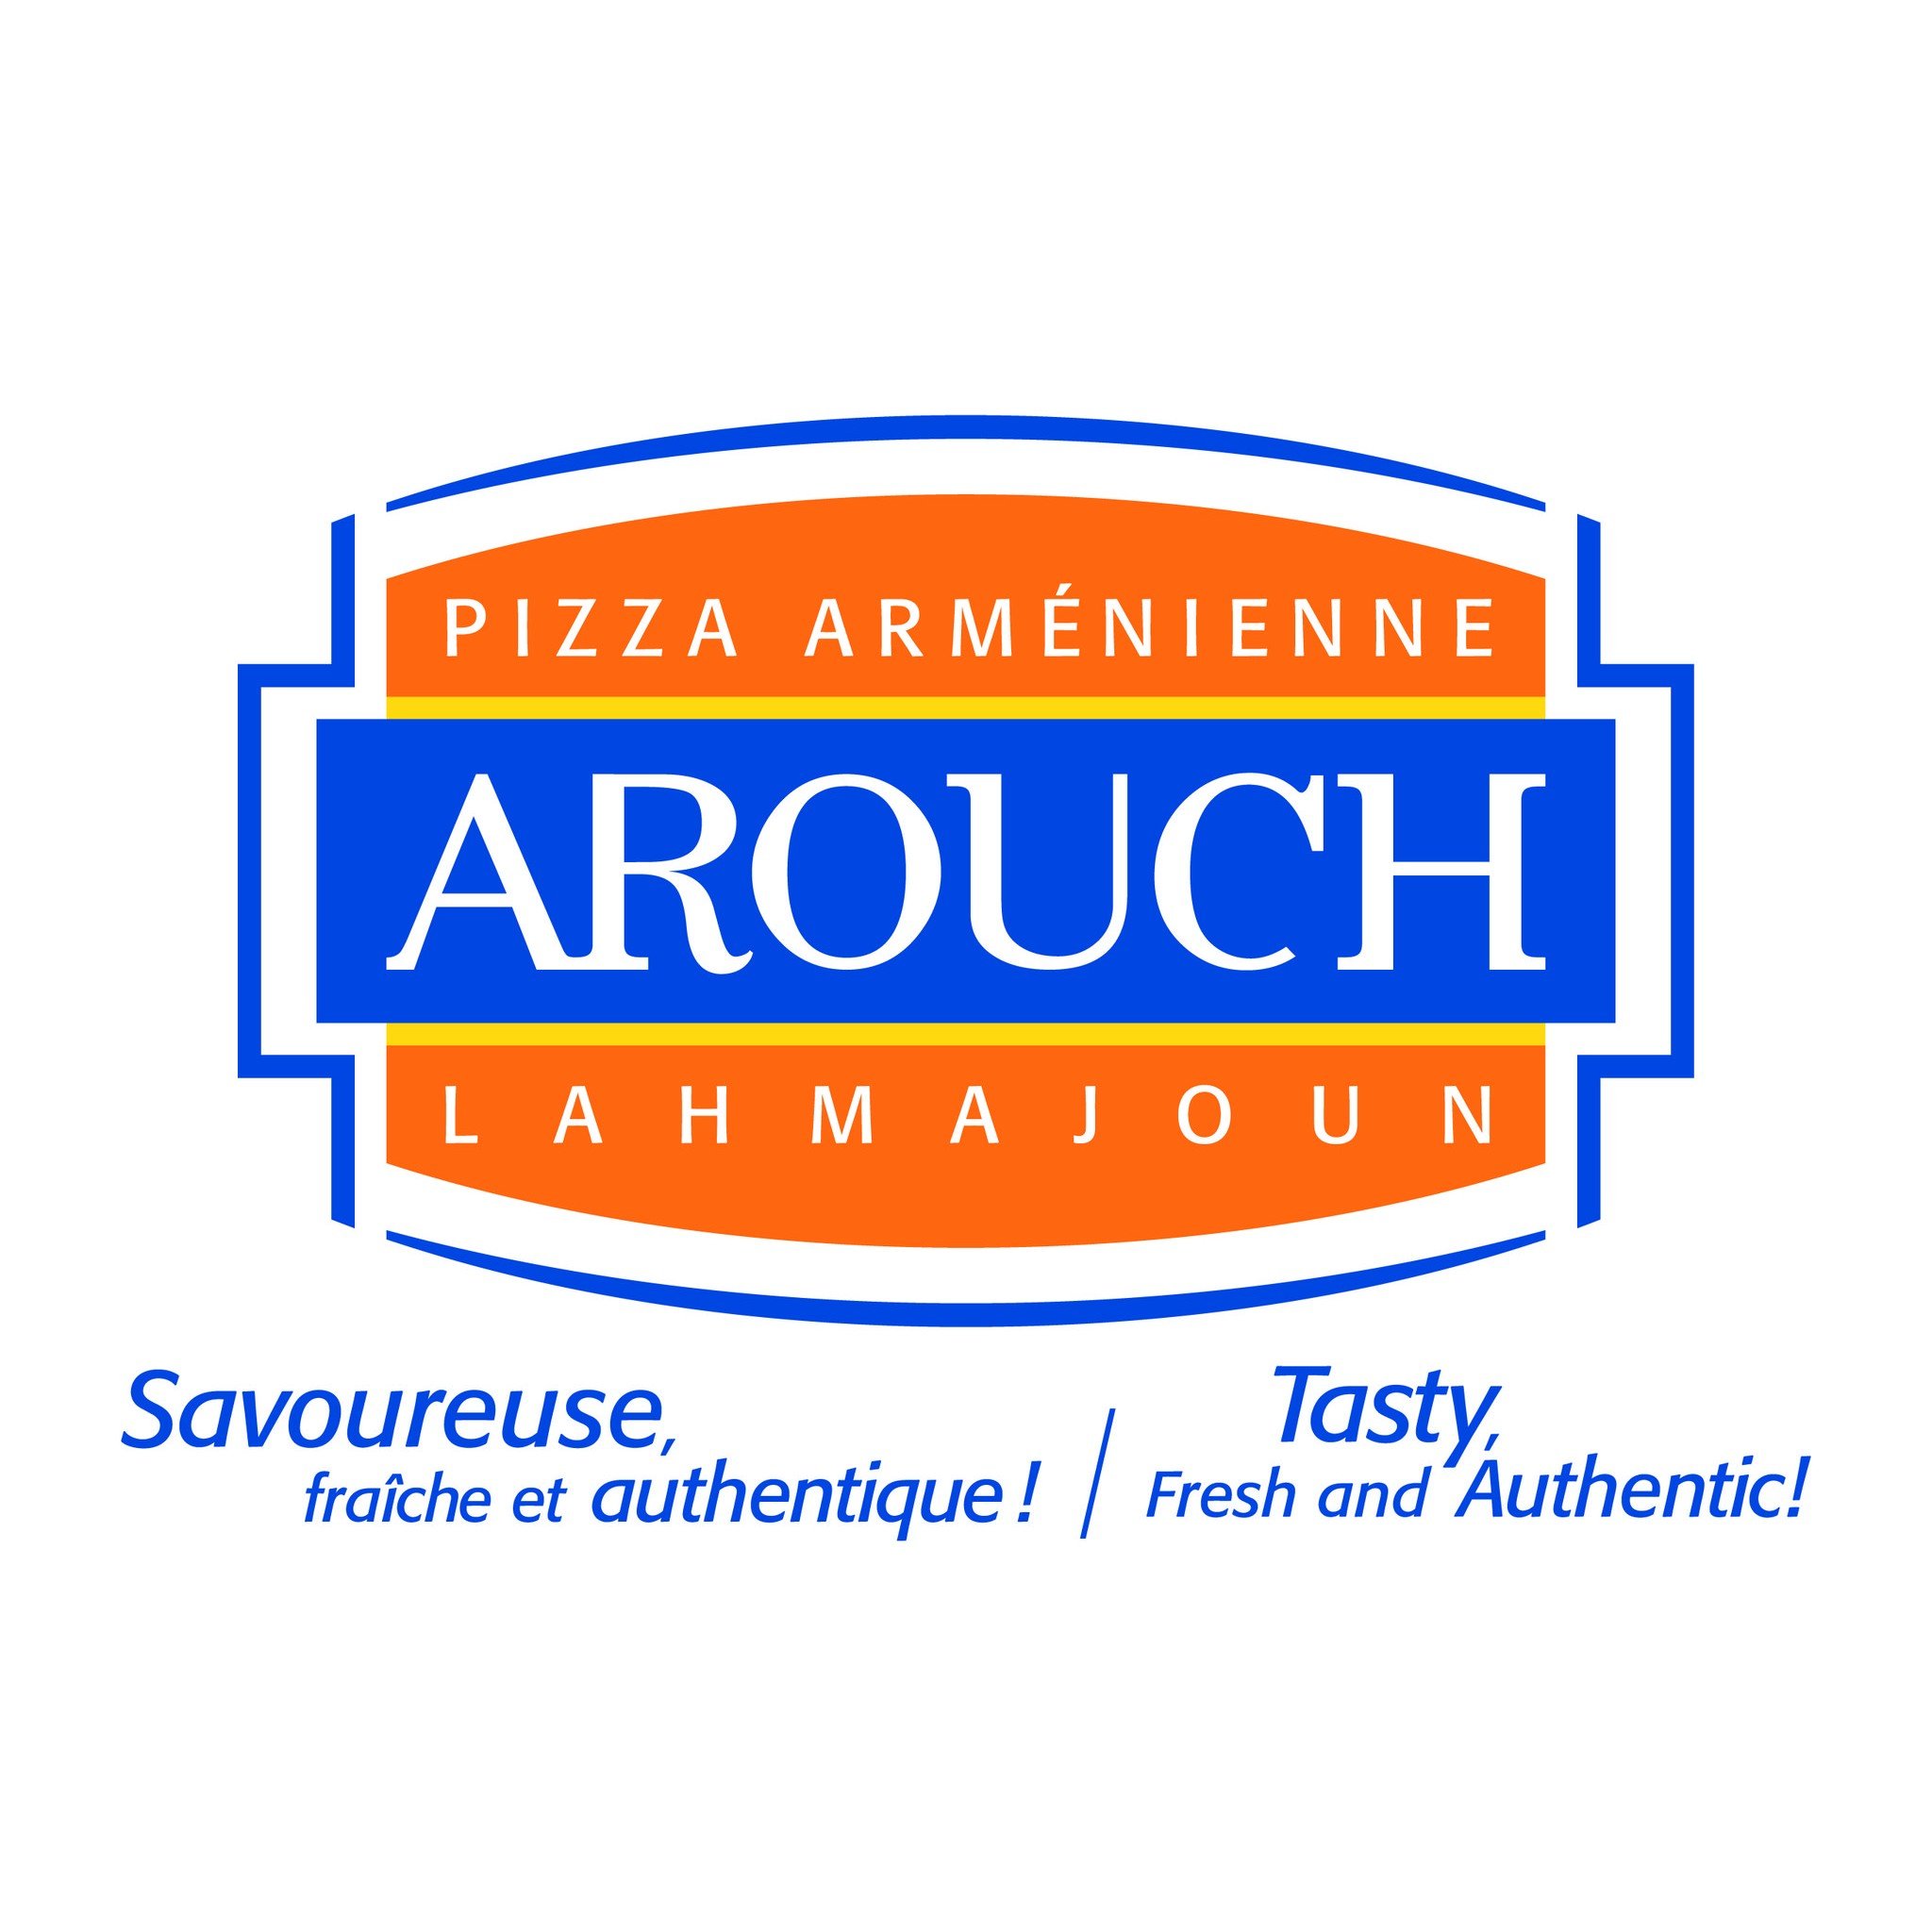 Arouch